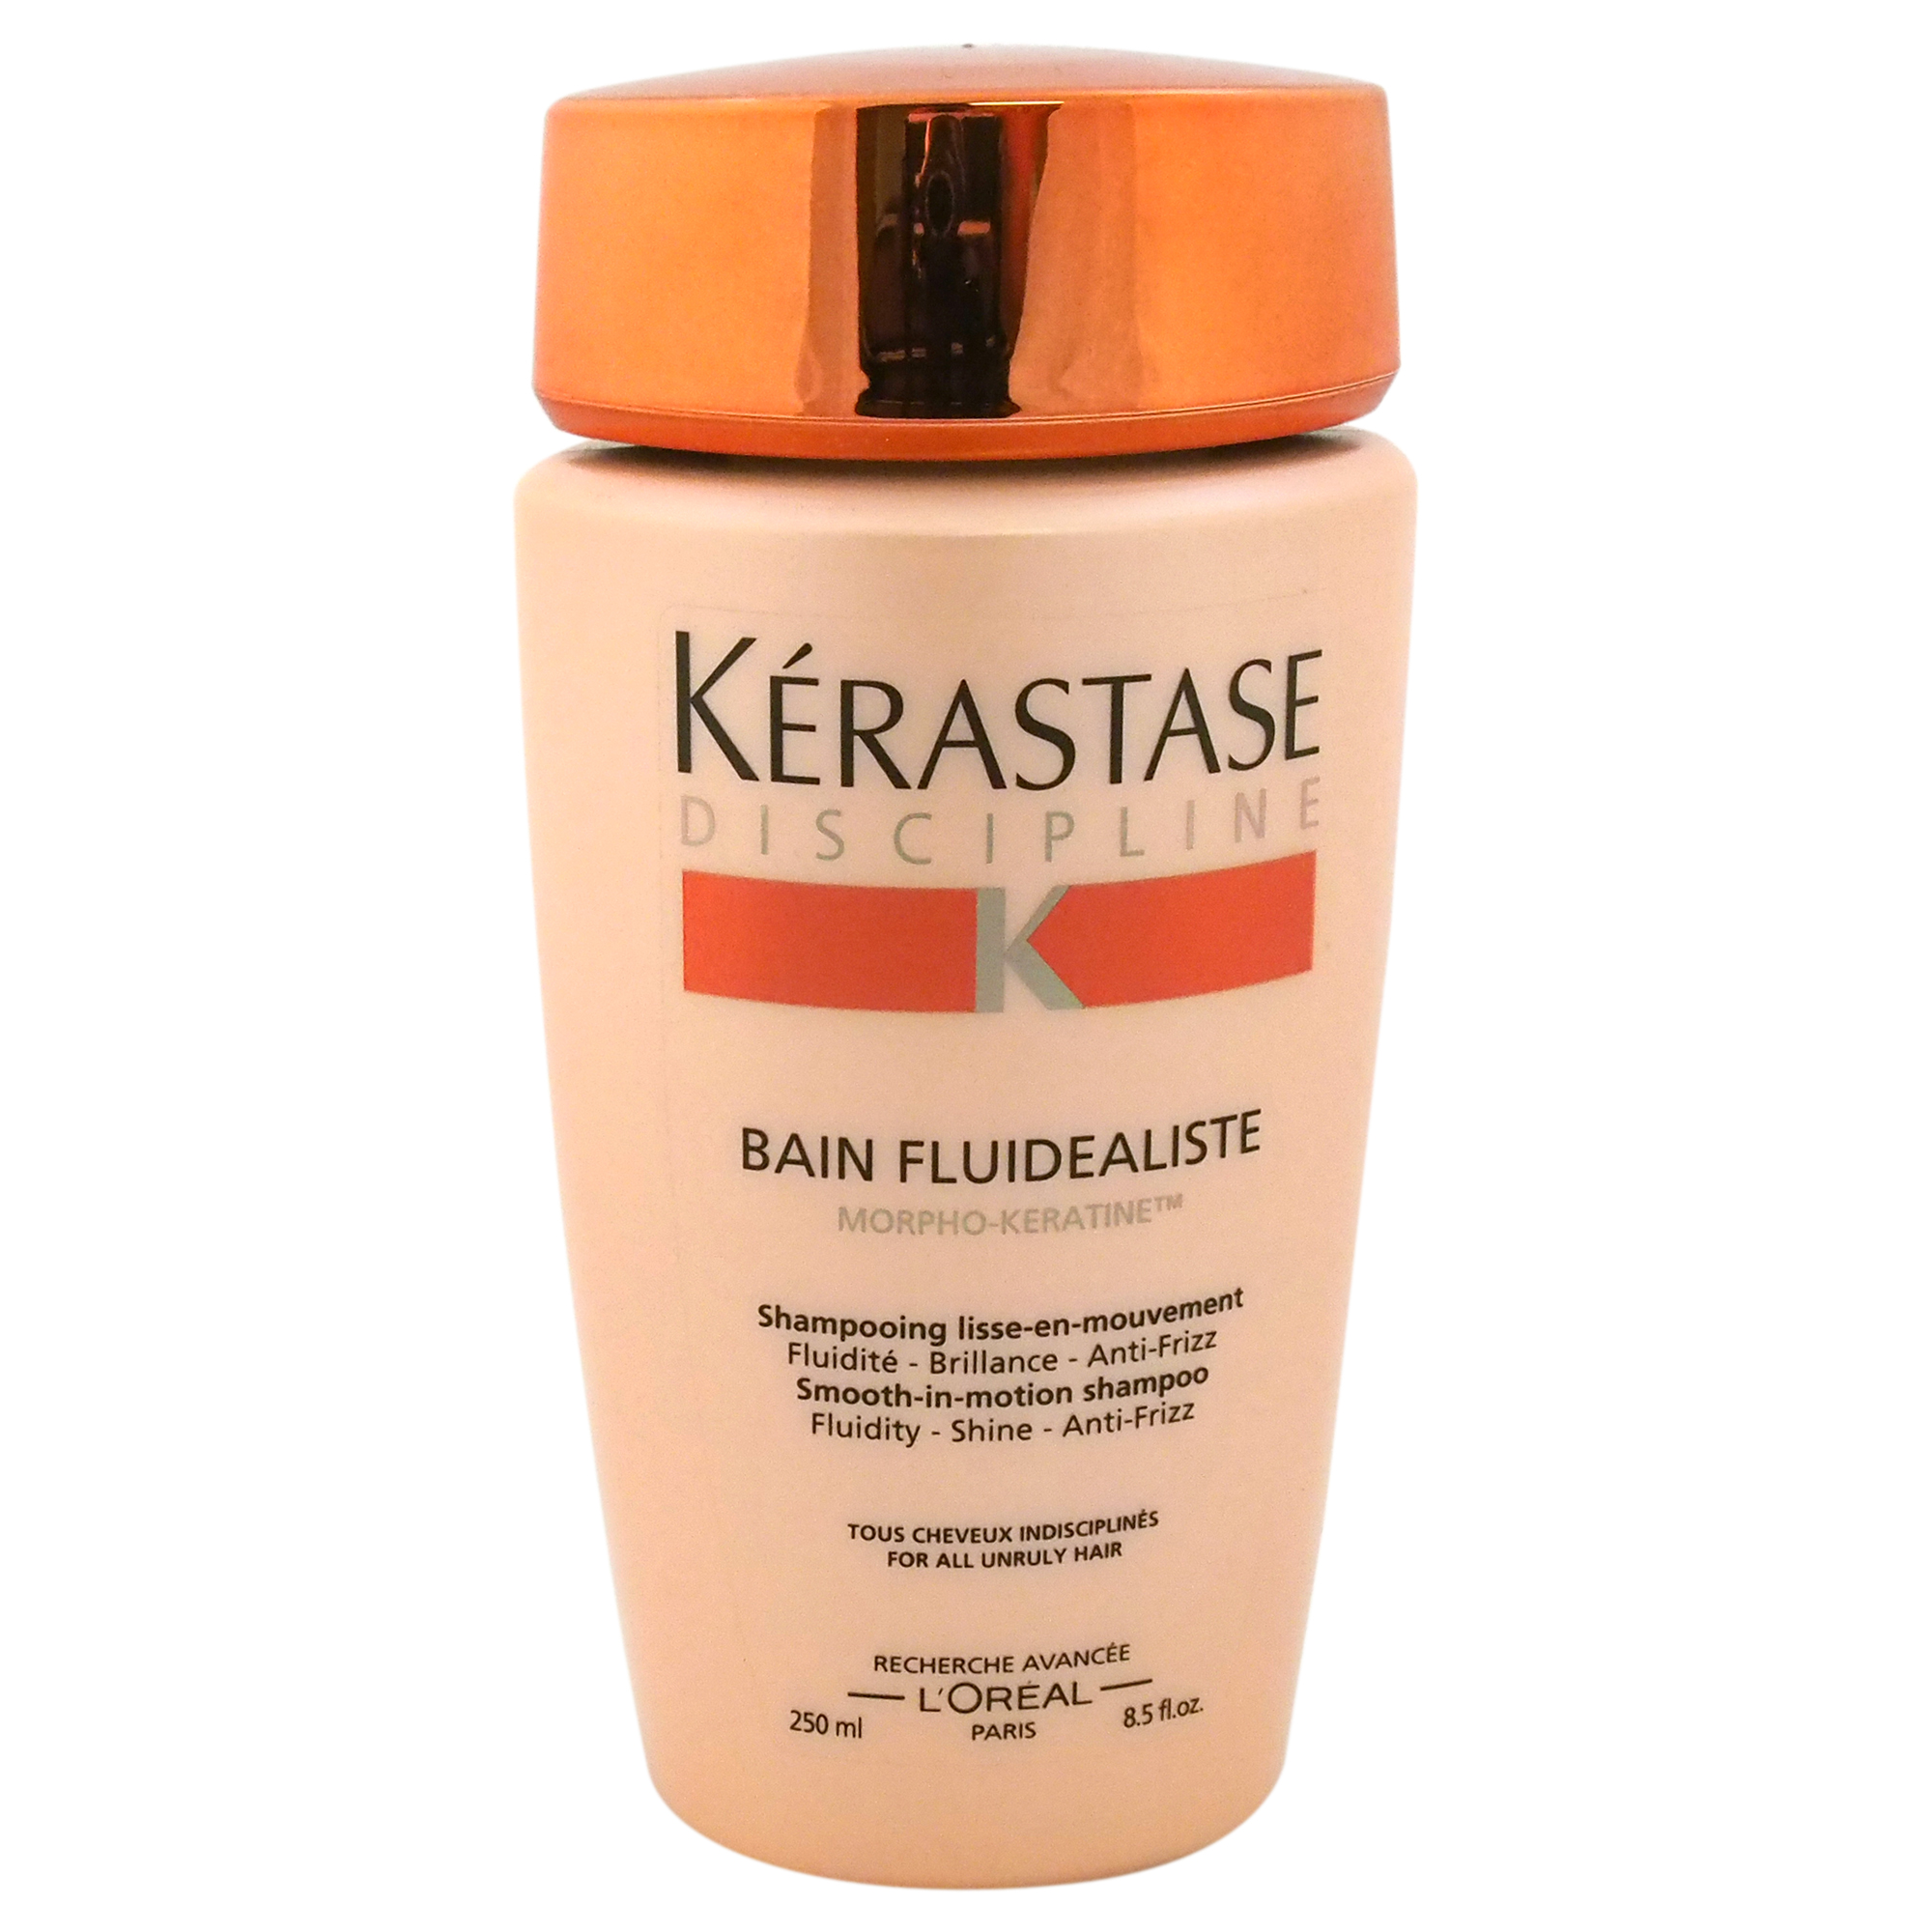 KERASTASE Discipline Bain Fluidealiste Smooth-in-Motion Shampoo